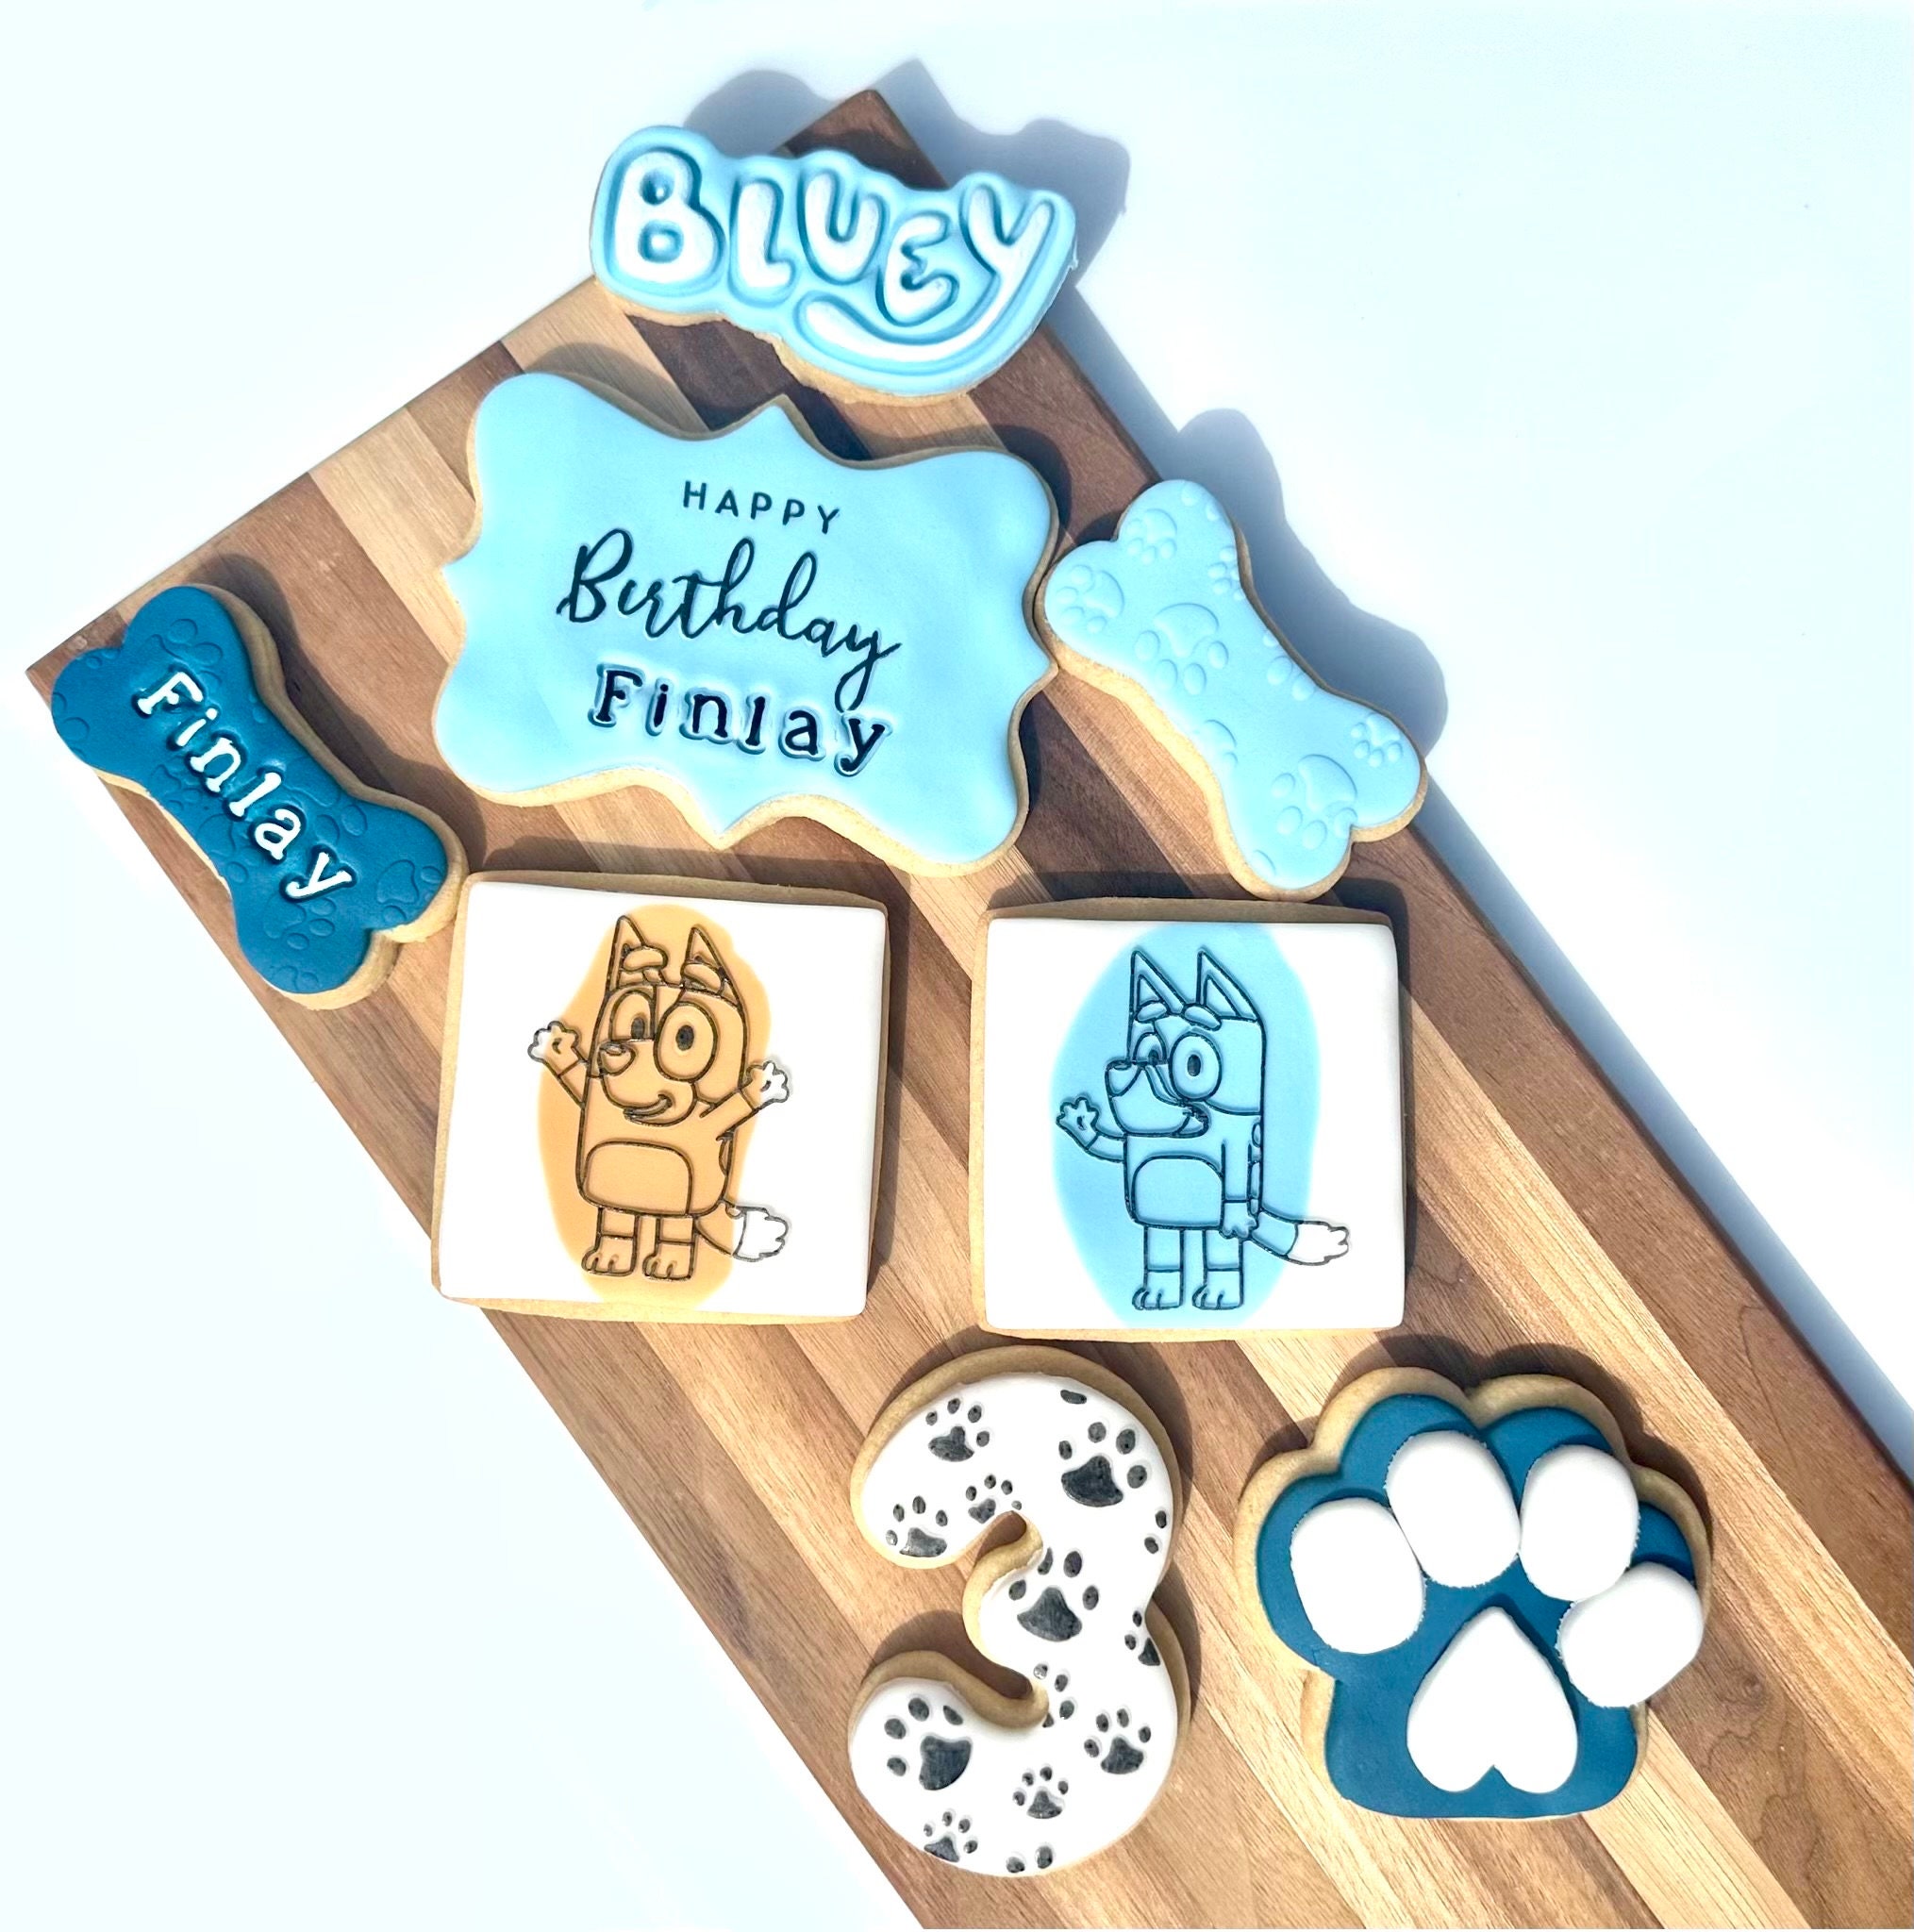 Bluey Inspired Cake Topper Joyeux anniversaire Décorations de gâteaux Bluey  et Bingo Blue Dog Themed for Kids Boy Girl Bday Party Supplies